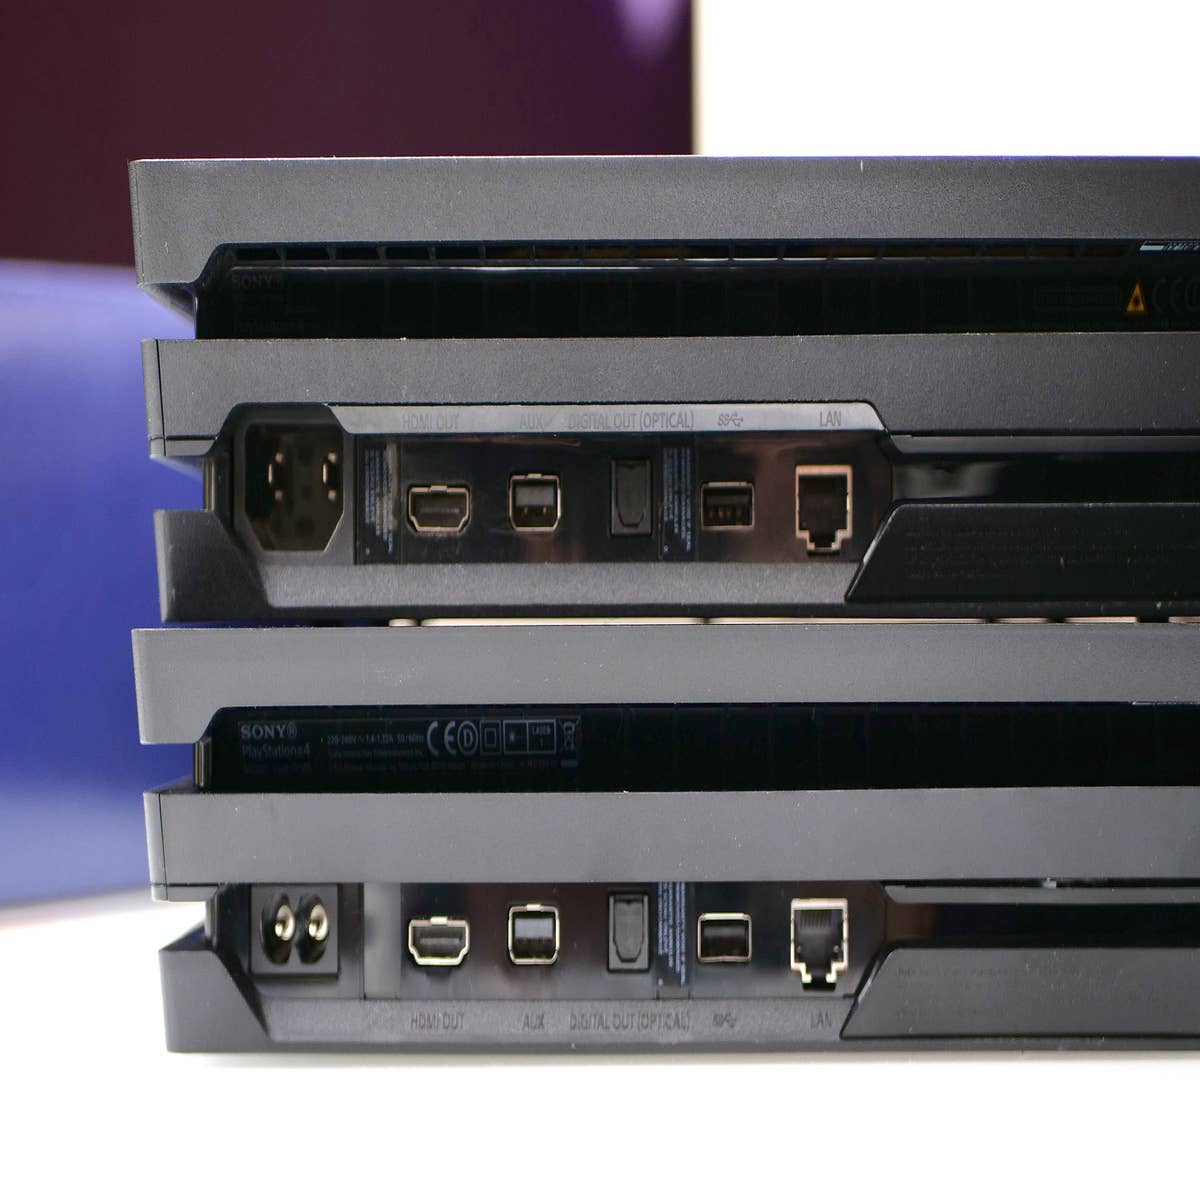 PlayStation 4 Pro the latest, hardware revision | Eurogamer.net